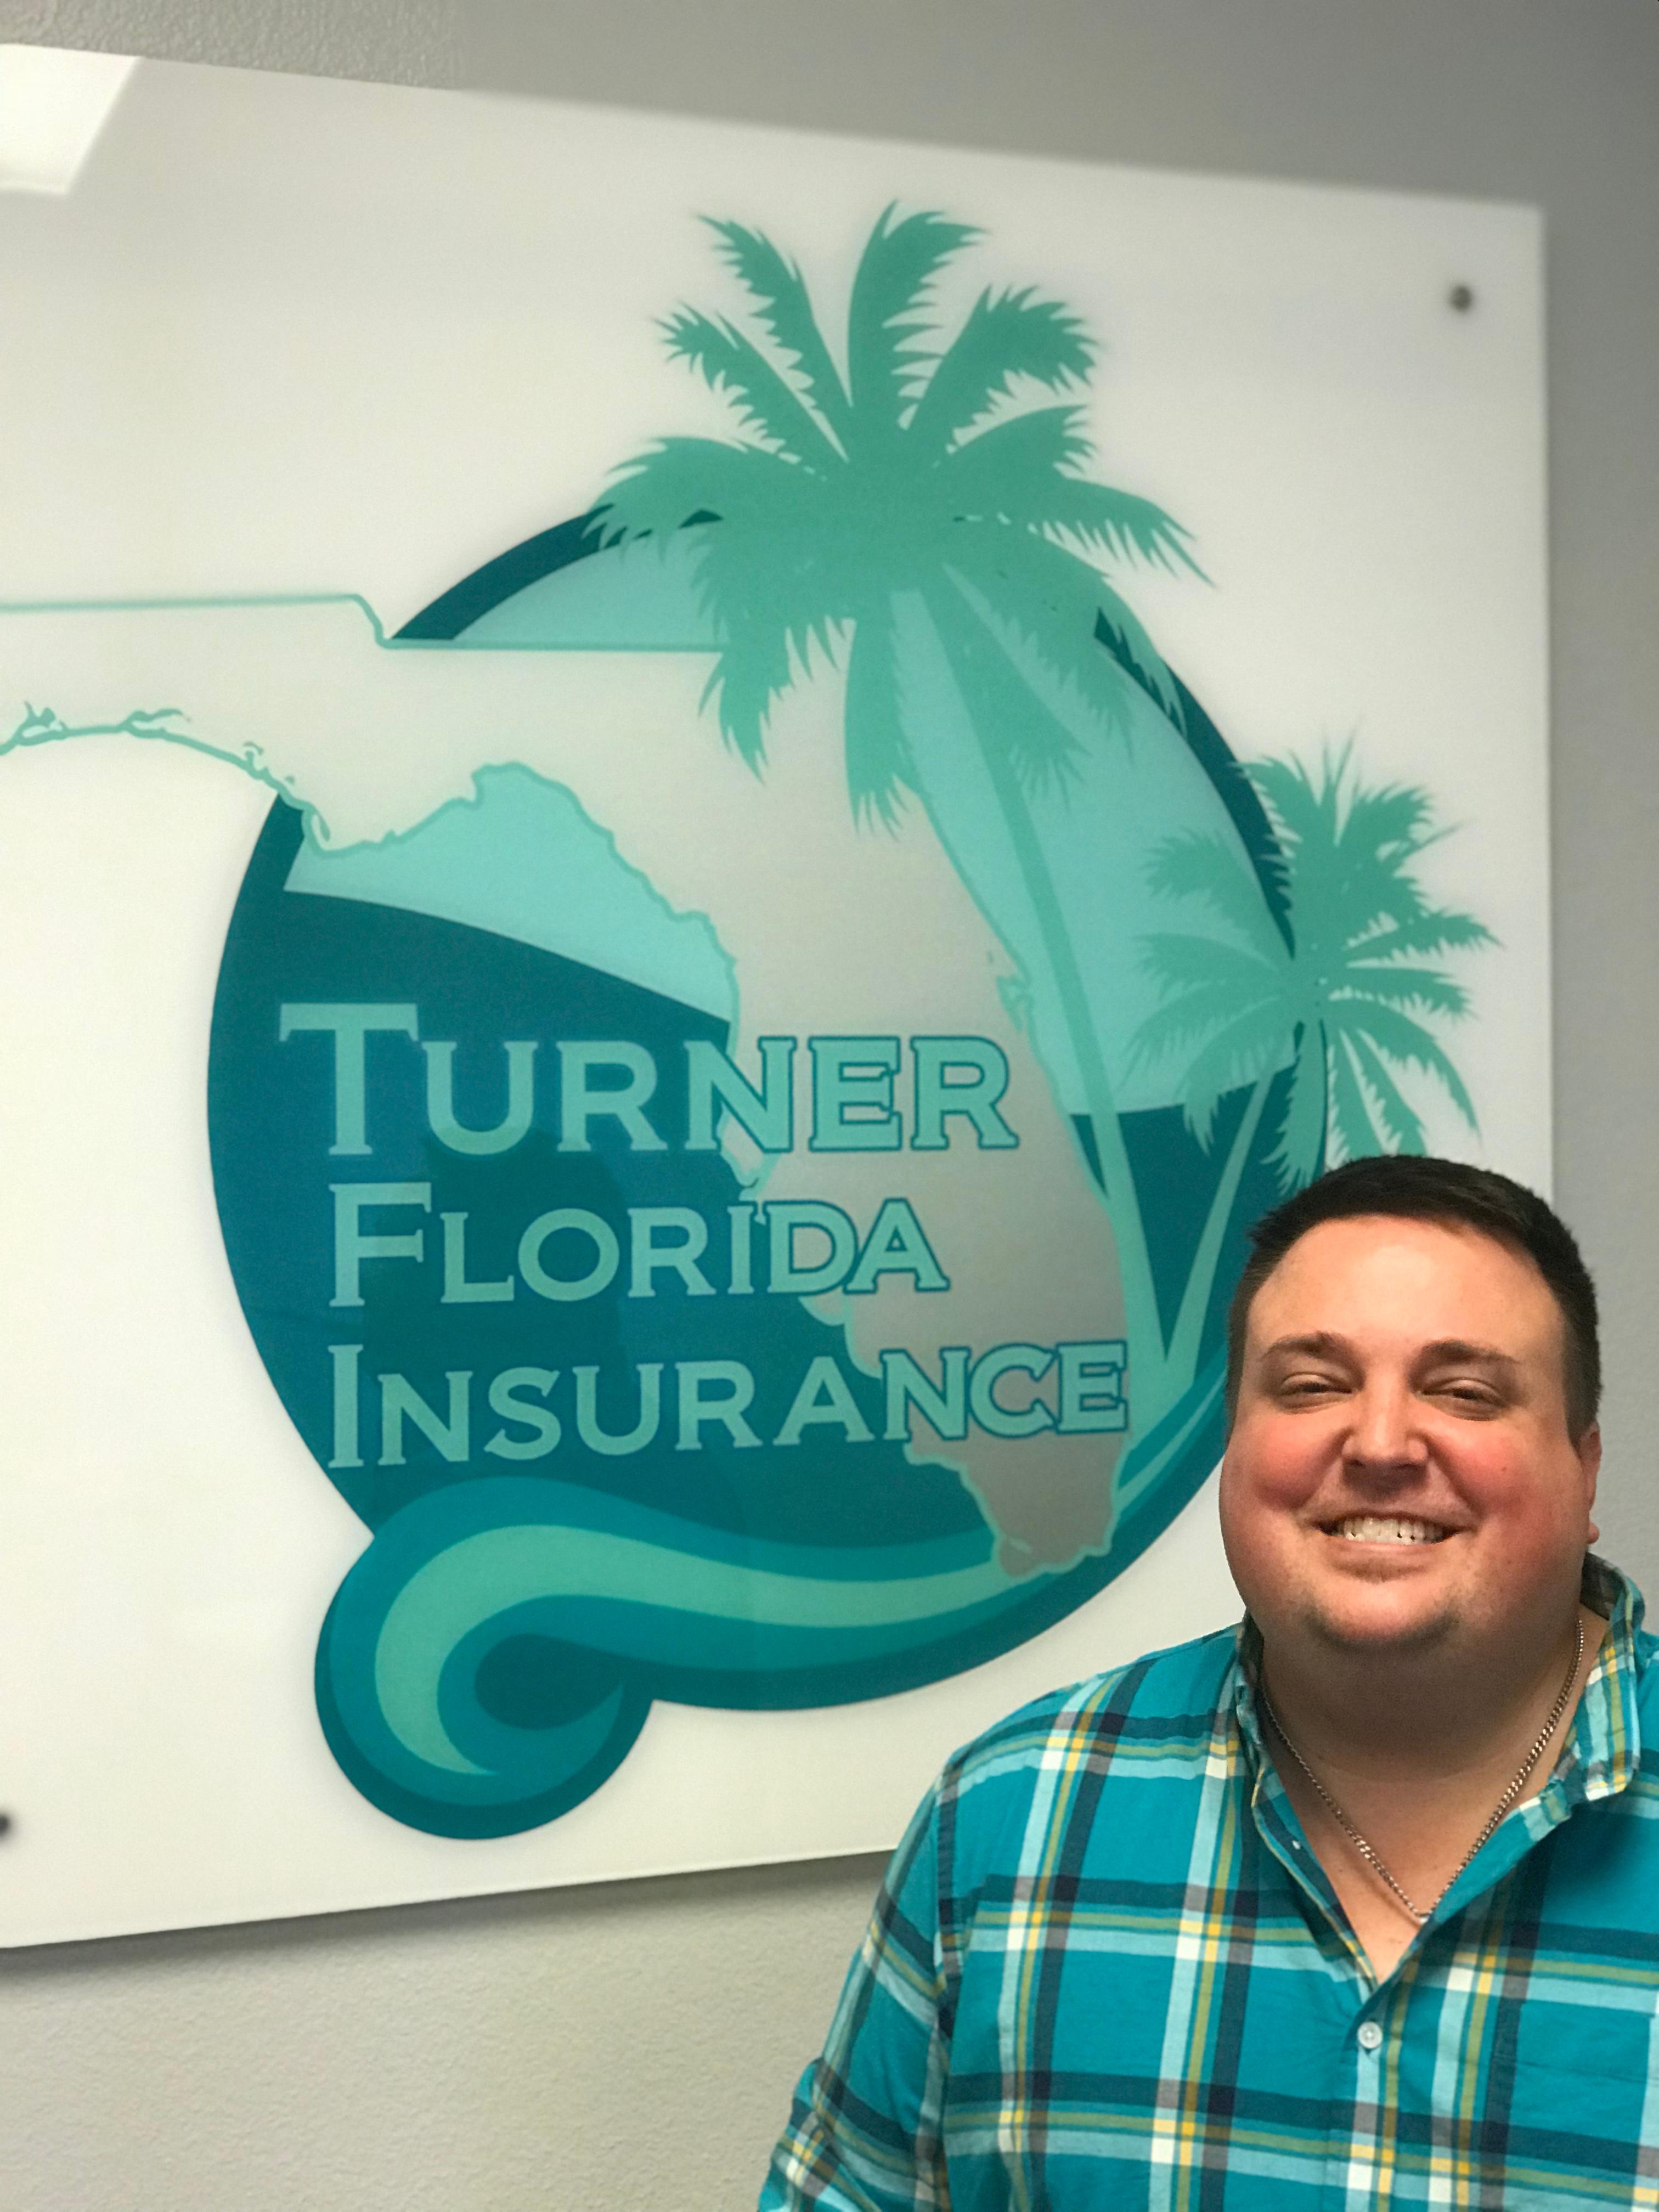 Turner Florida Insurance Photo